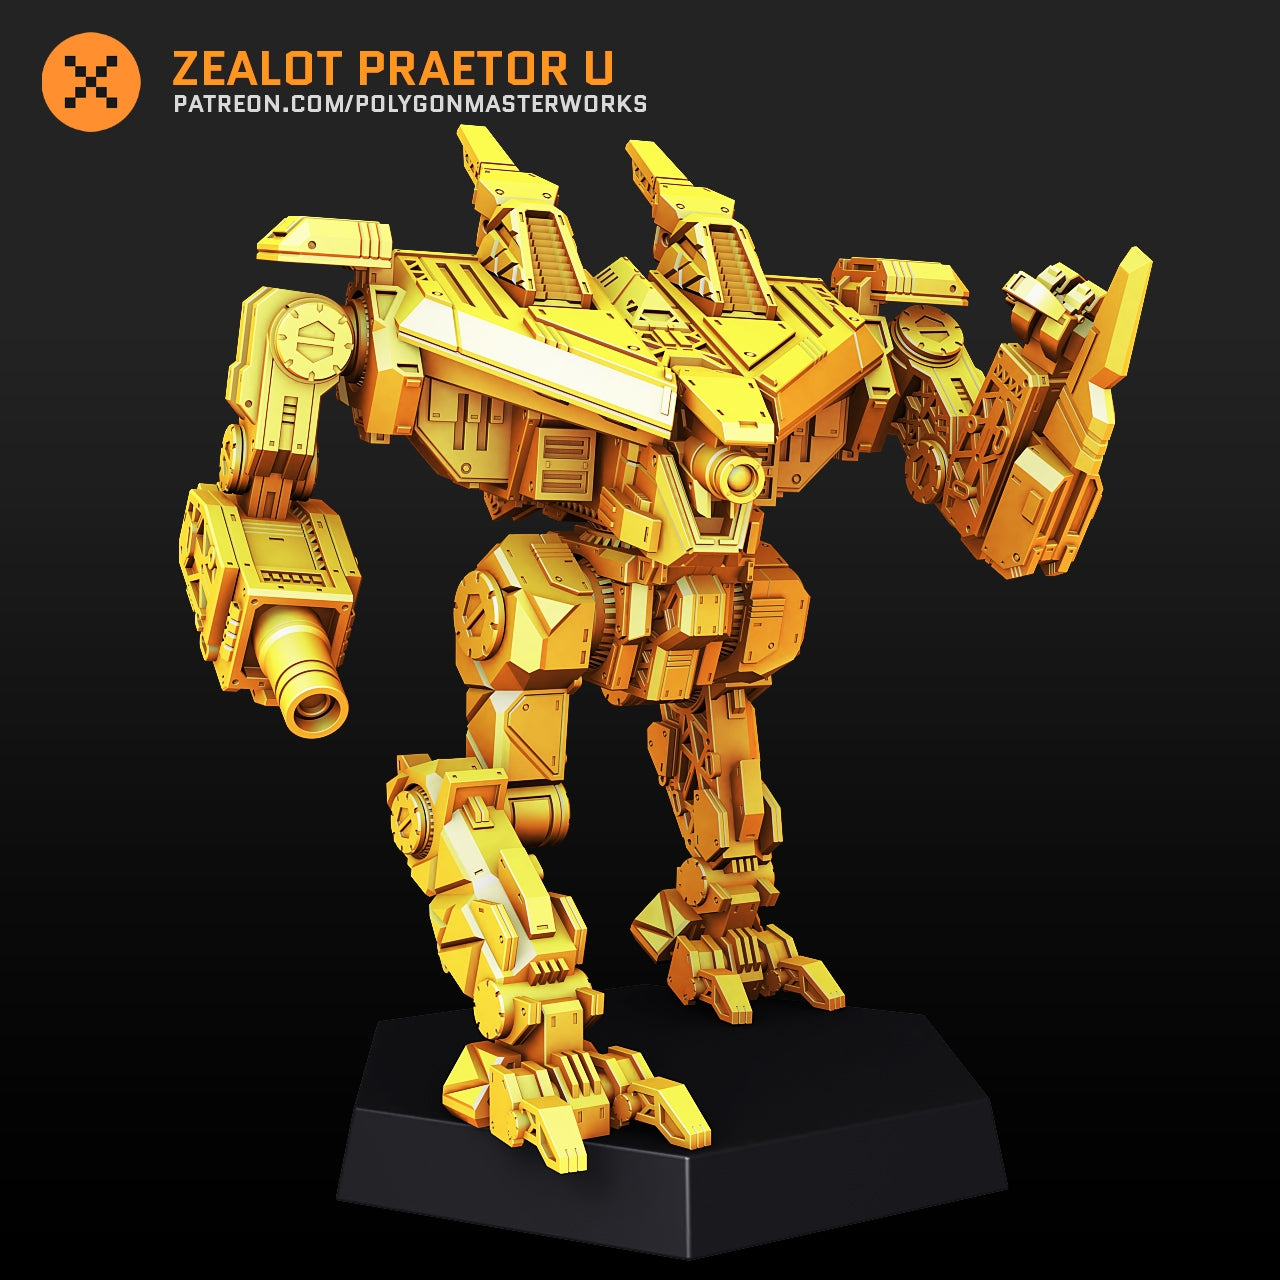 Zealot Praetor U (By PMW) Alternate Battletech Mechwarrior Miniatures